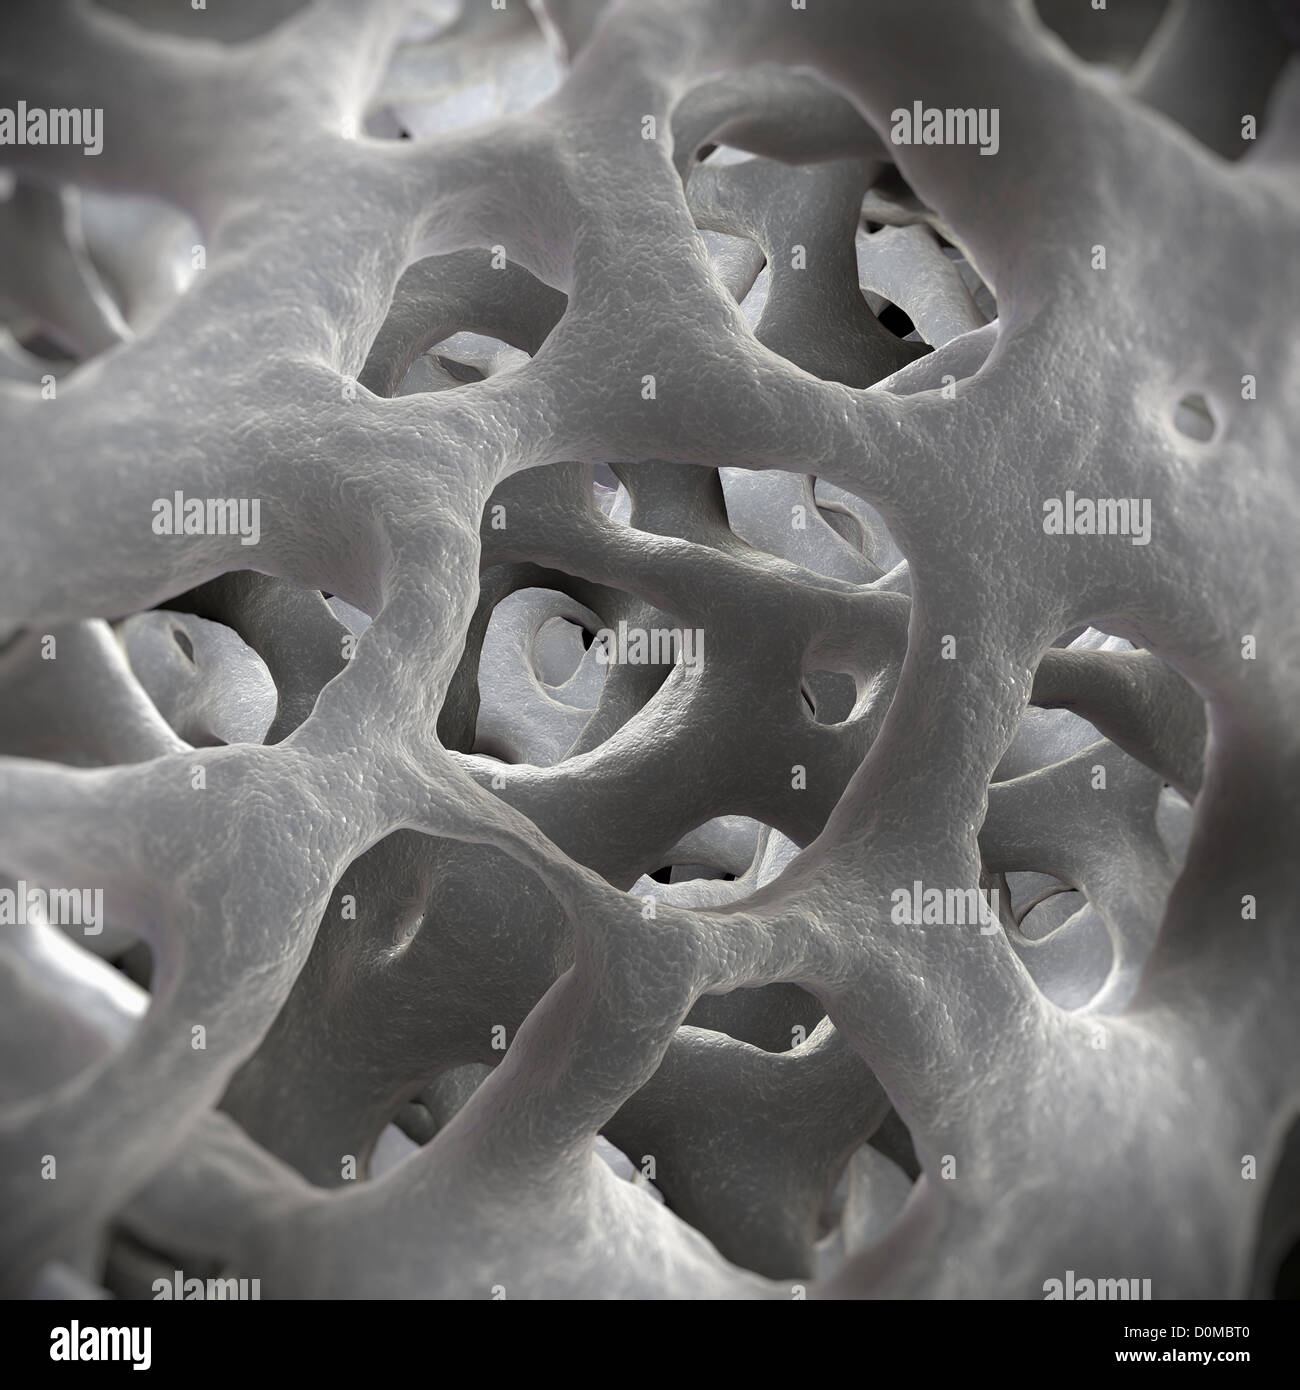 Formaciones perforadas de esponjosa o 'spongy' el hueso. Foto de stock